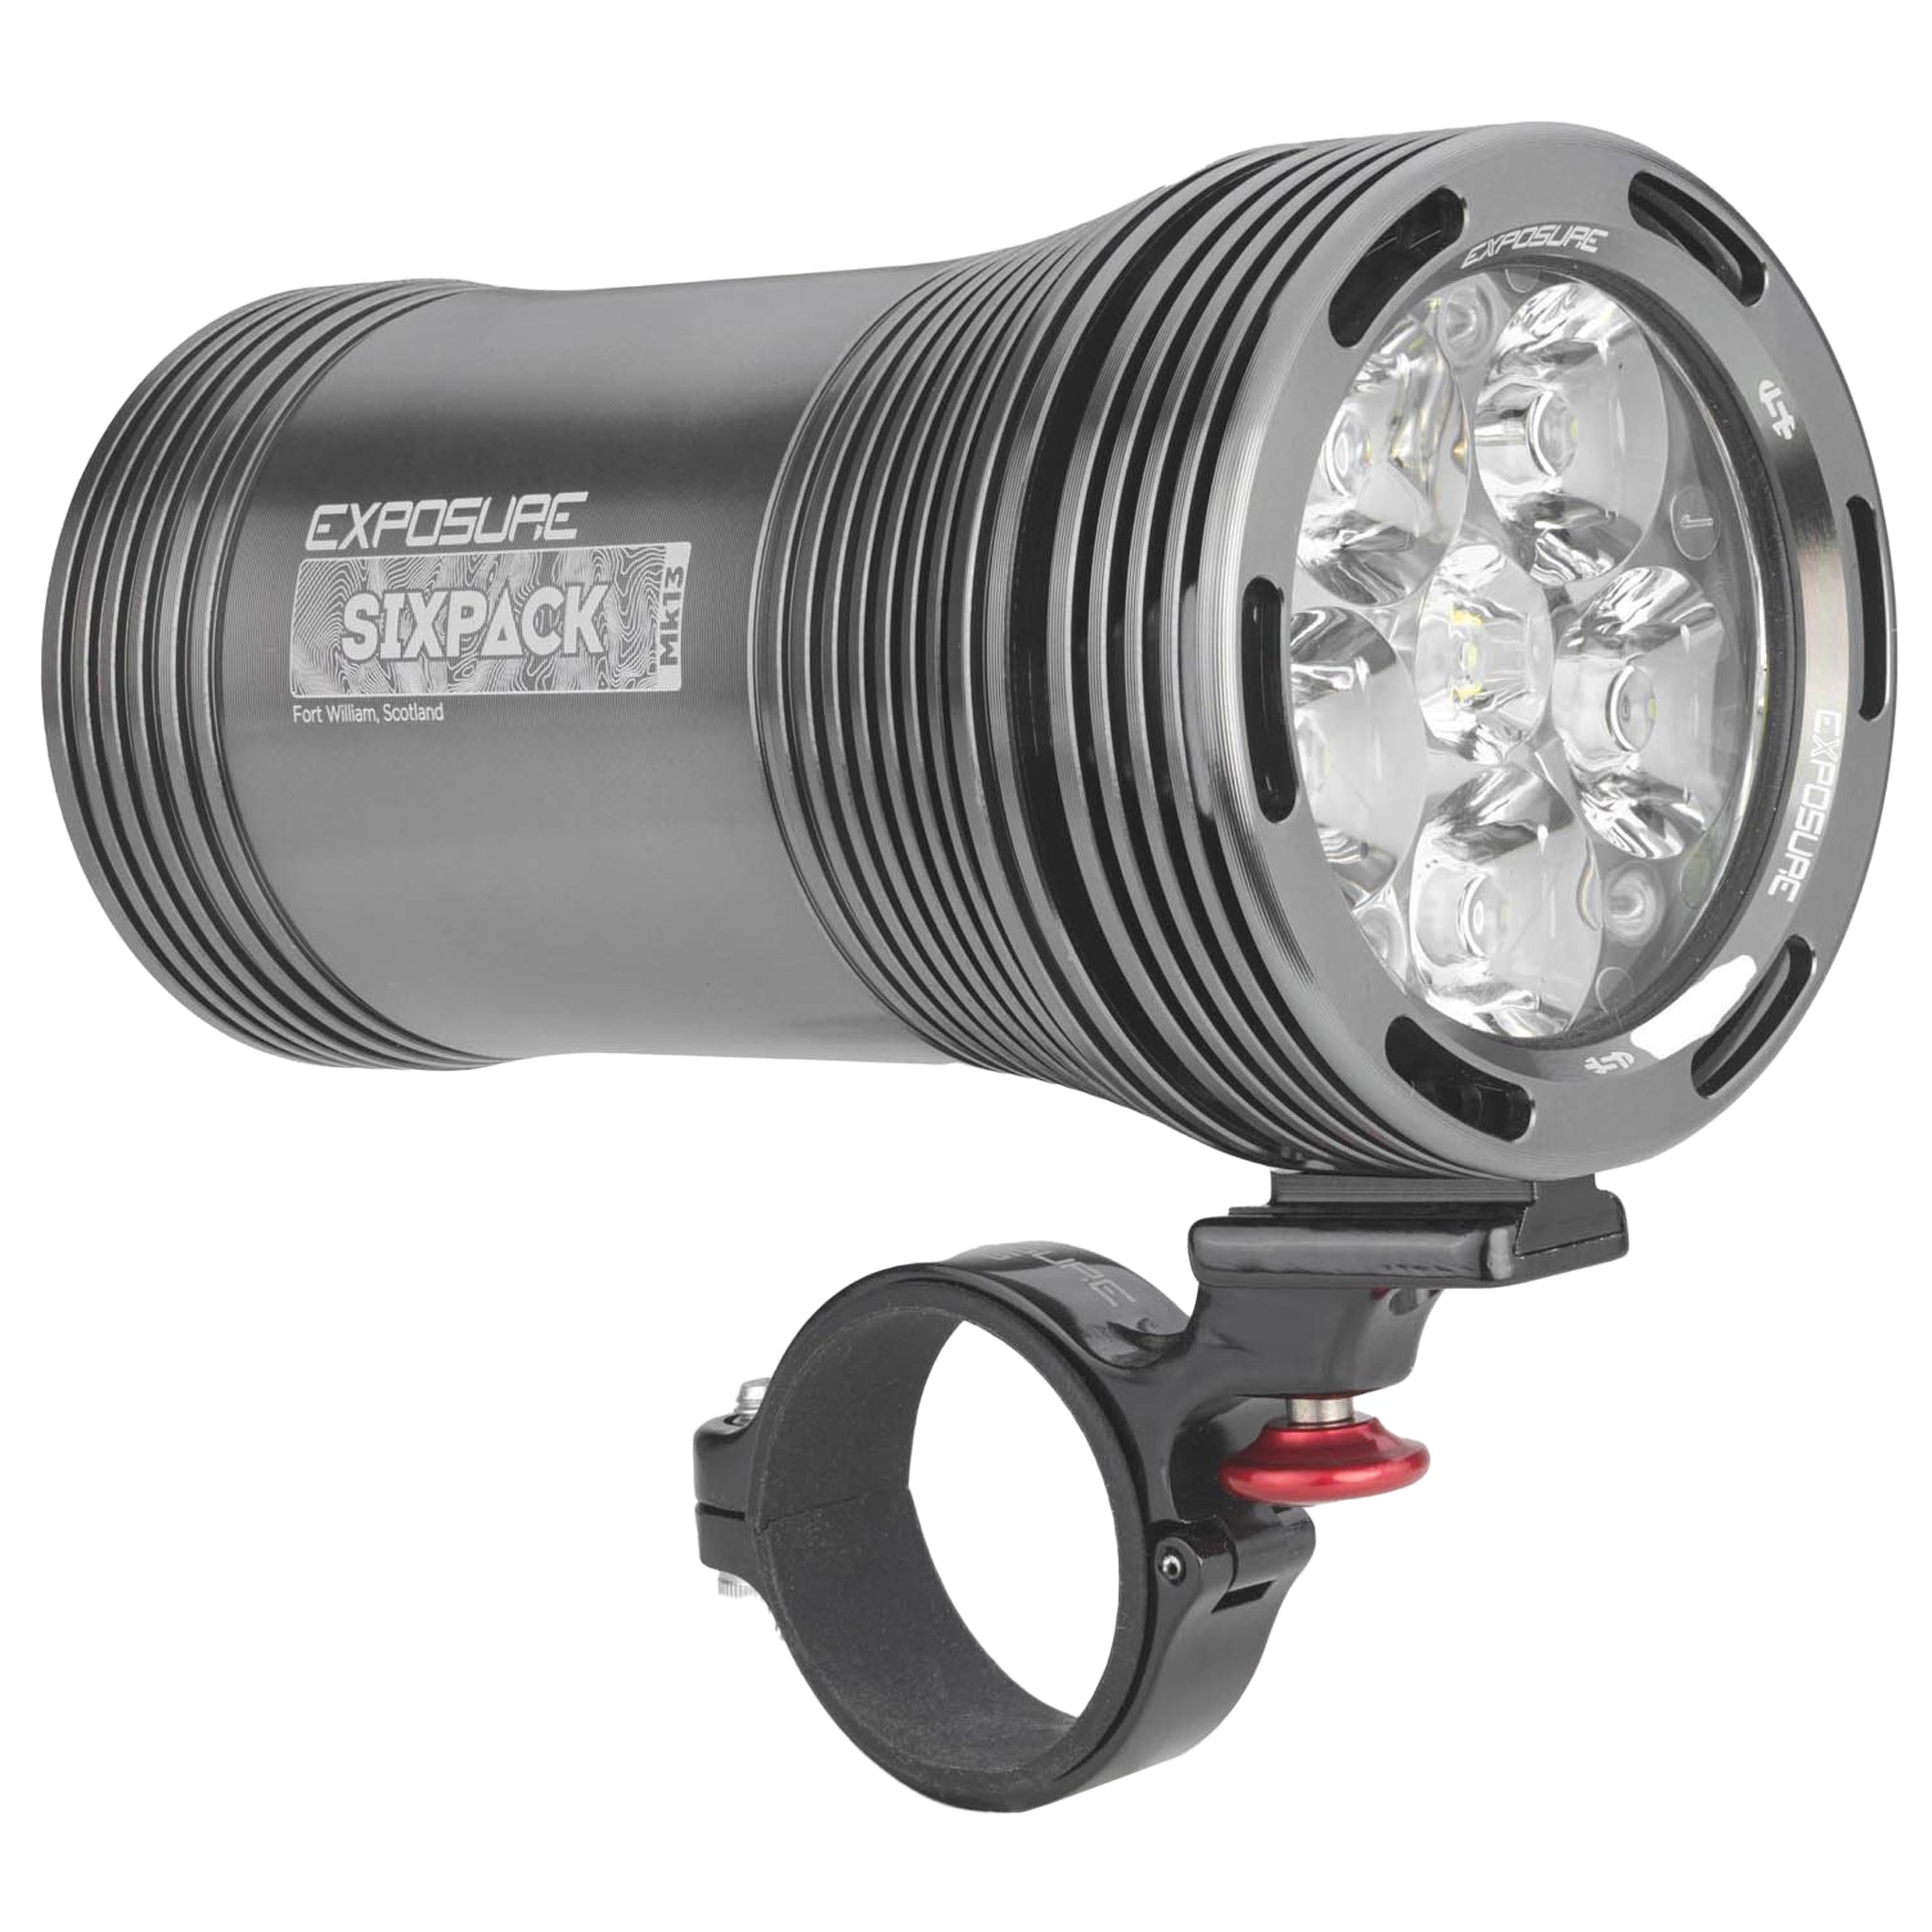 Exposure Lights Six Pack MK13 Cordless Light System